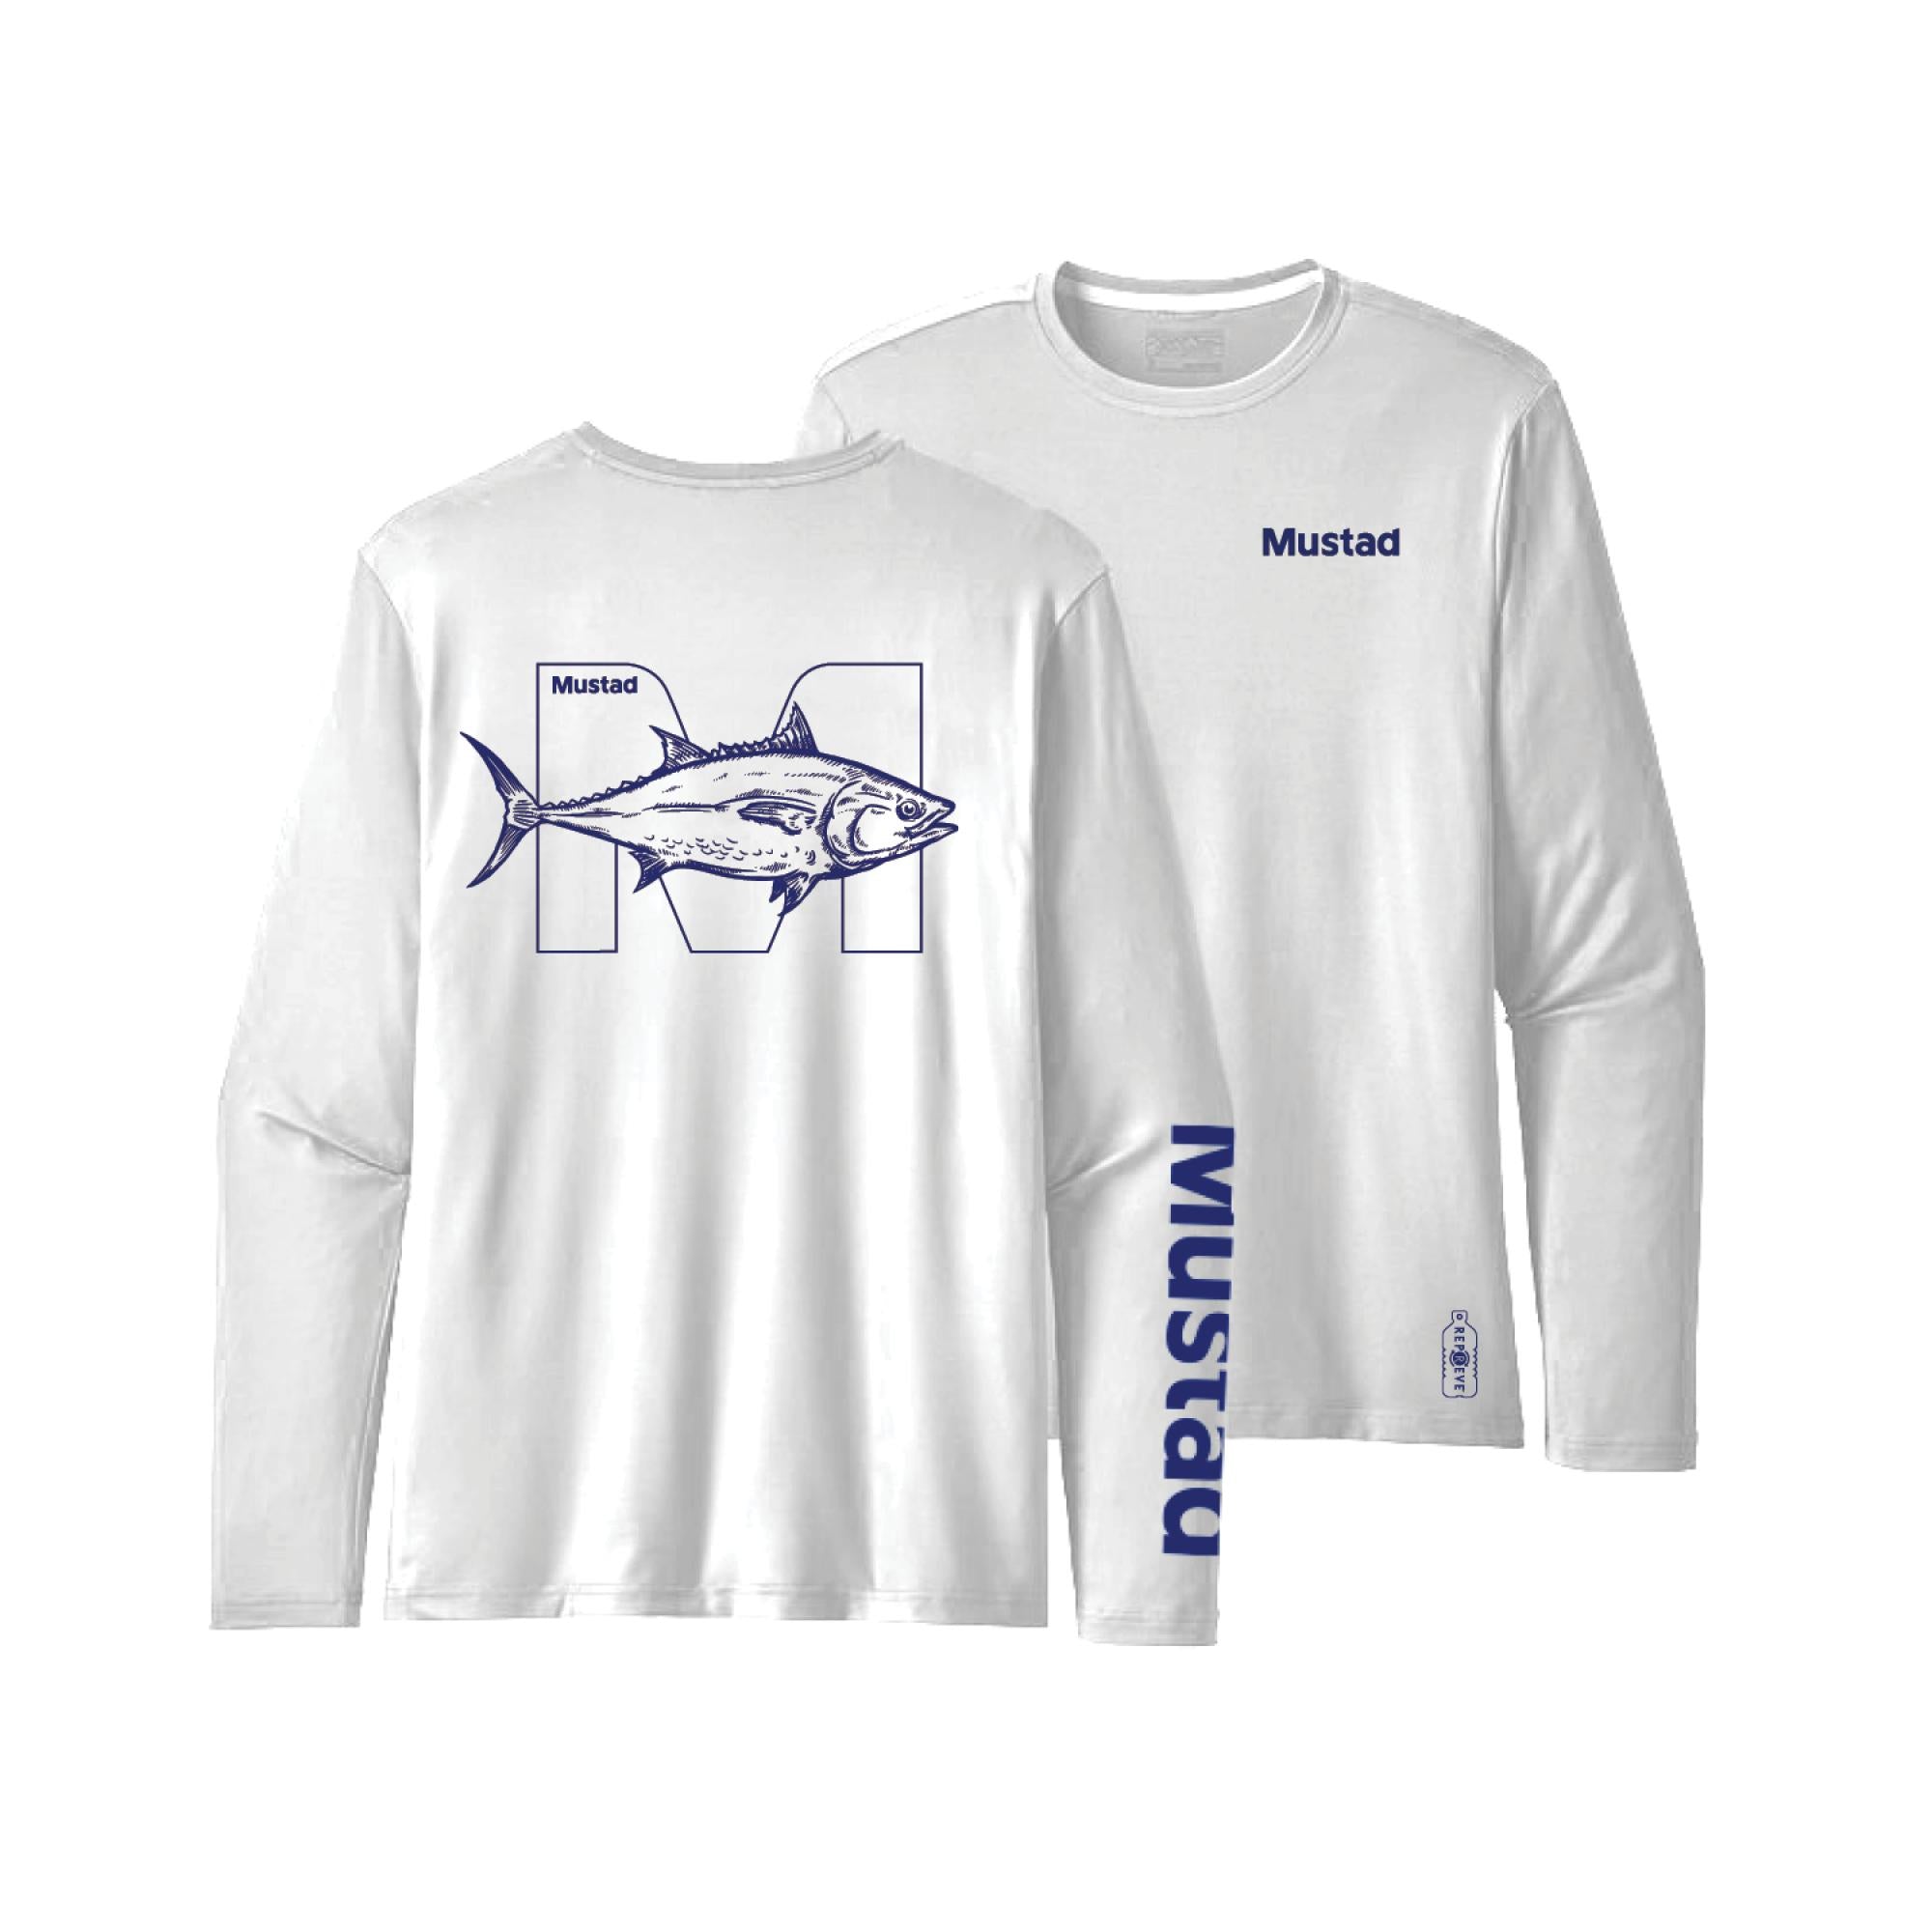 Tuna Long Sleeve Technical Shirt - S / White / 1 PCS